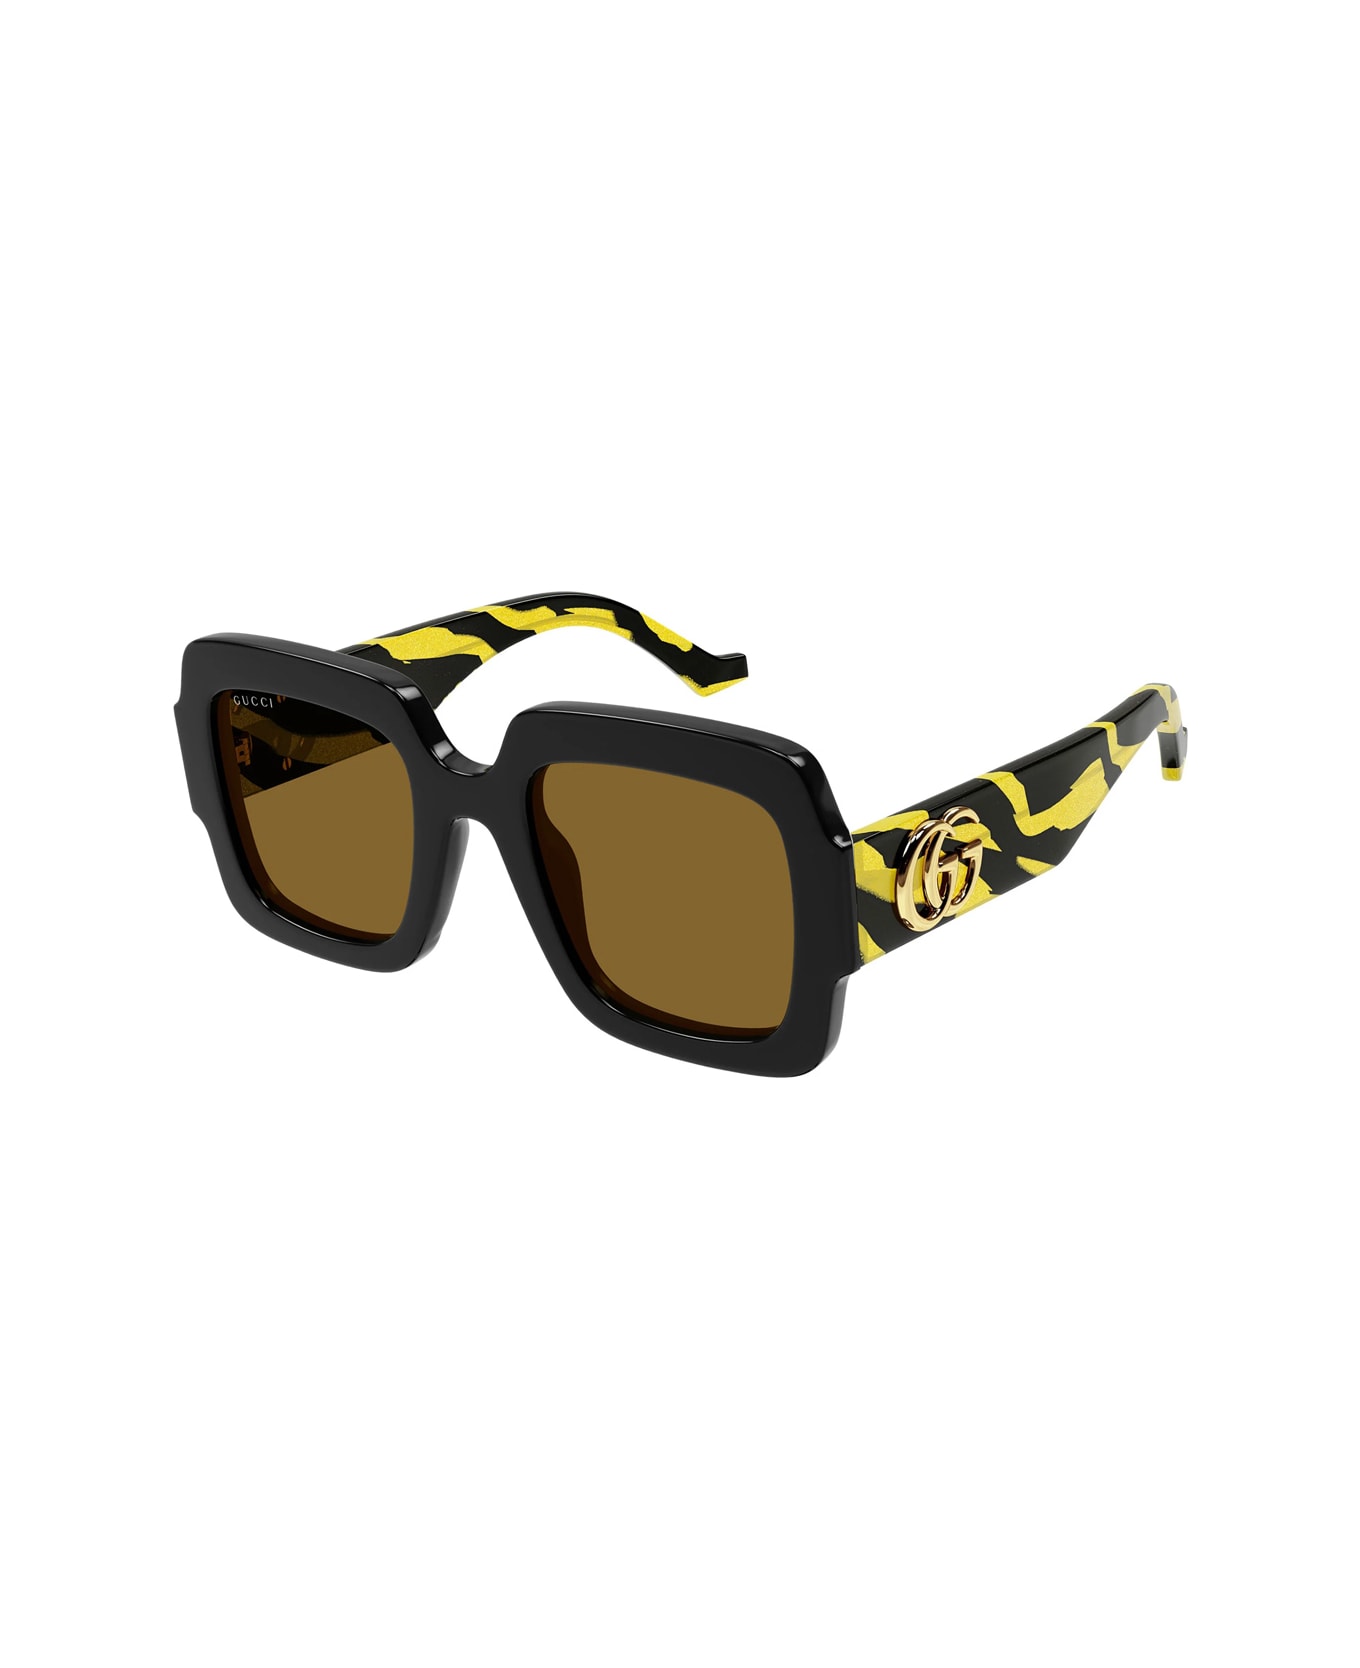 Gucci Eyewear Gg1547s 004 Sunglasses - Nero